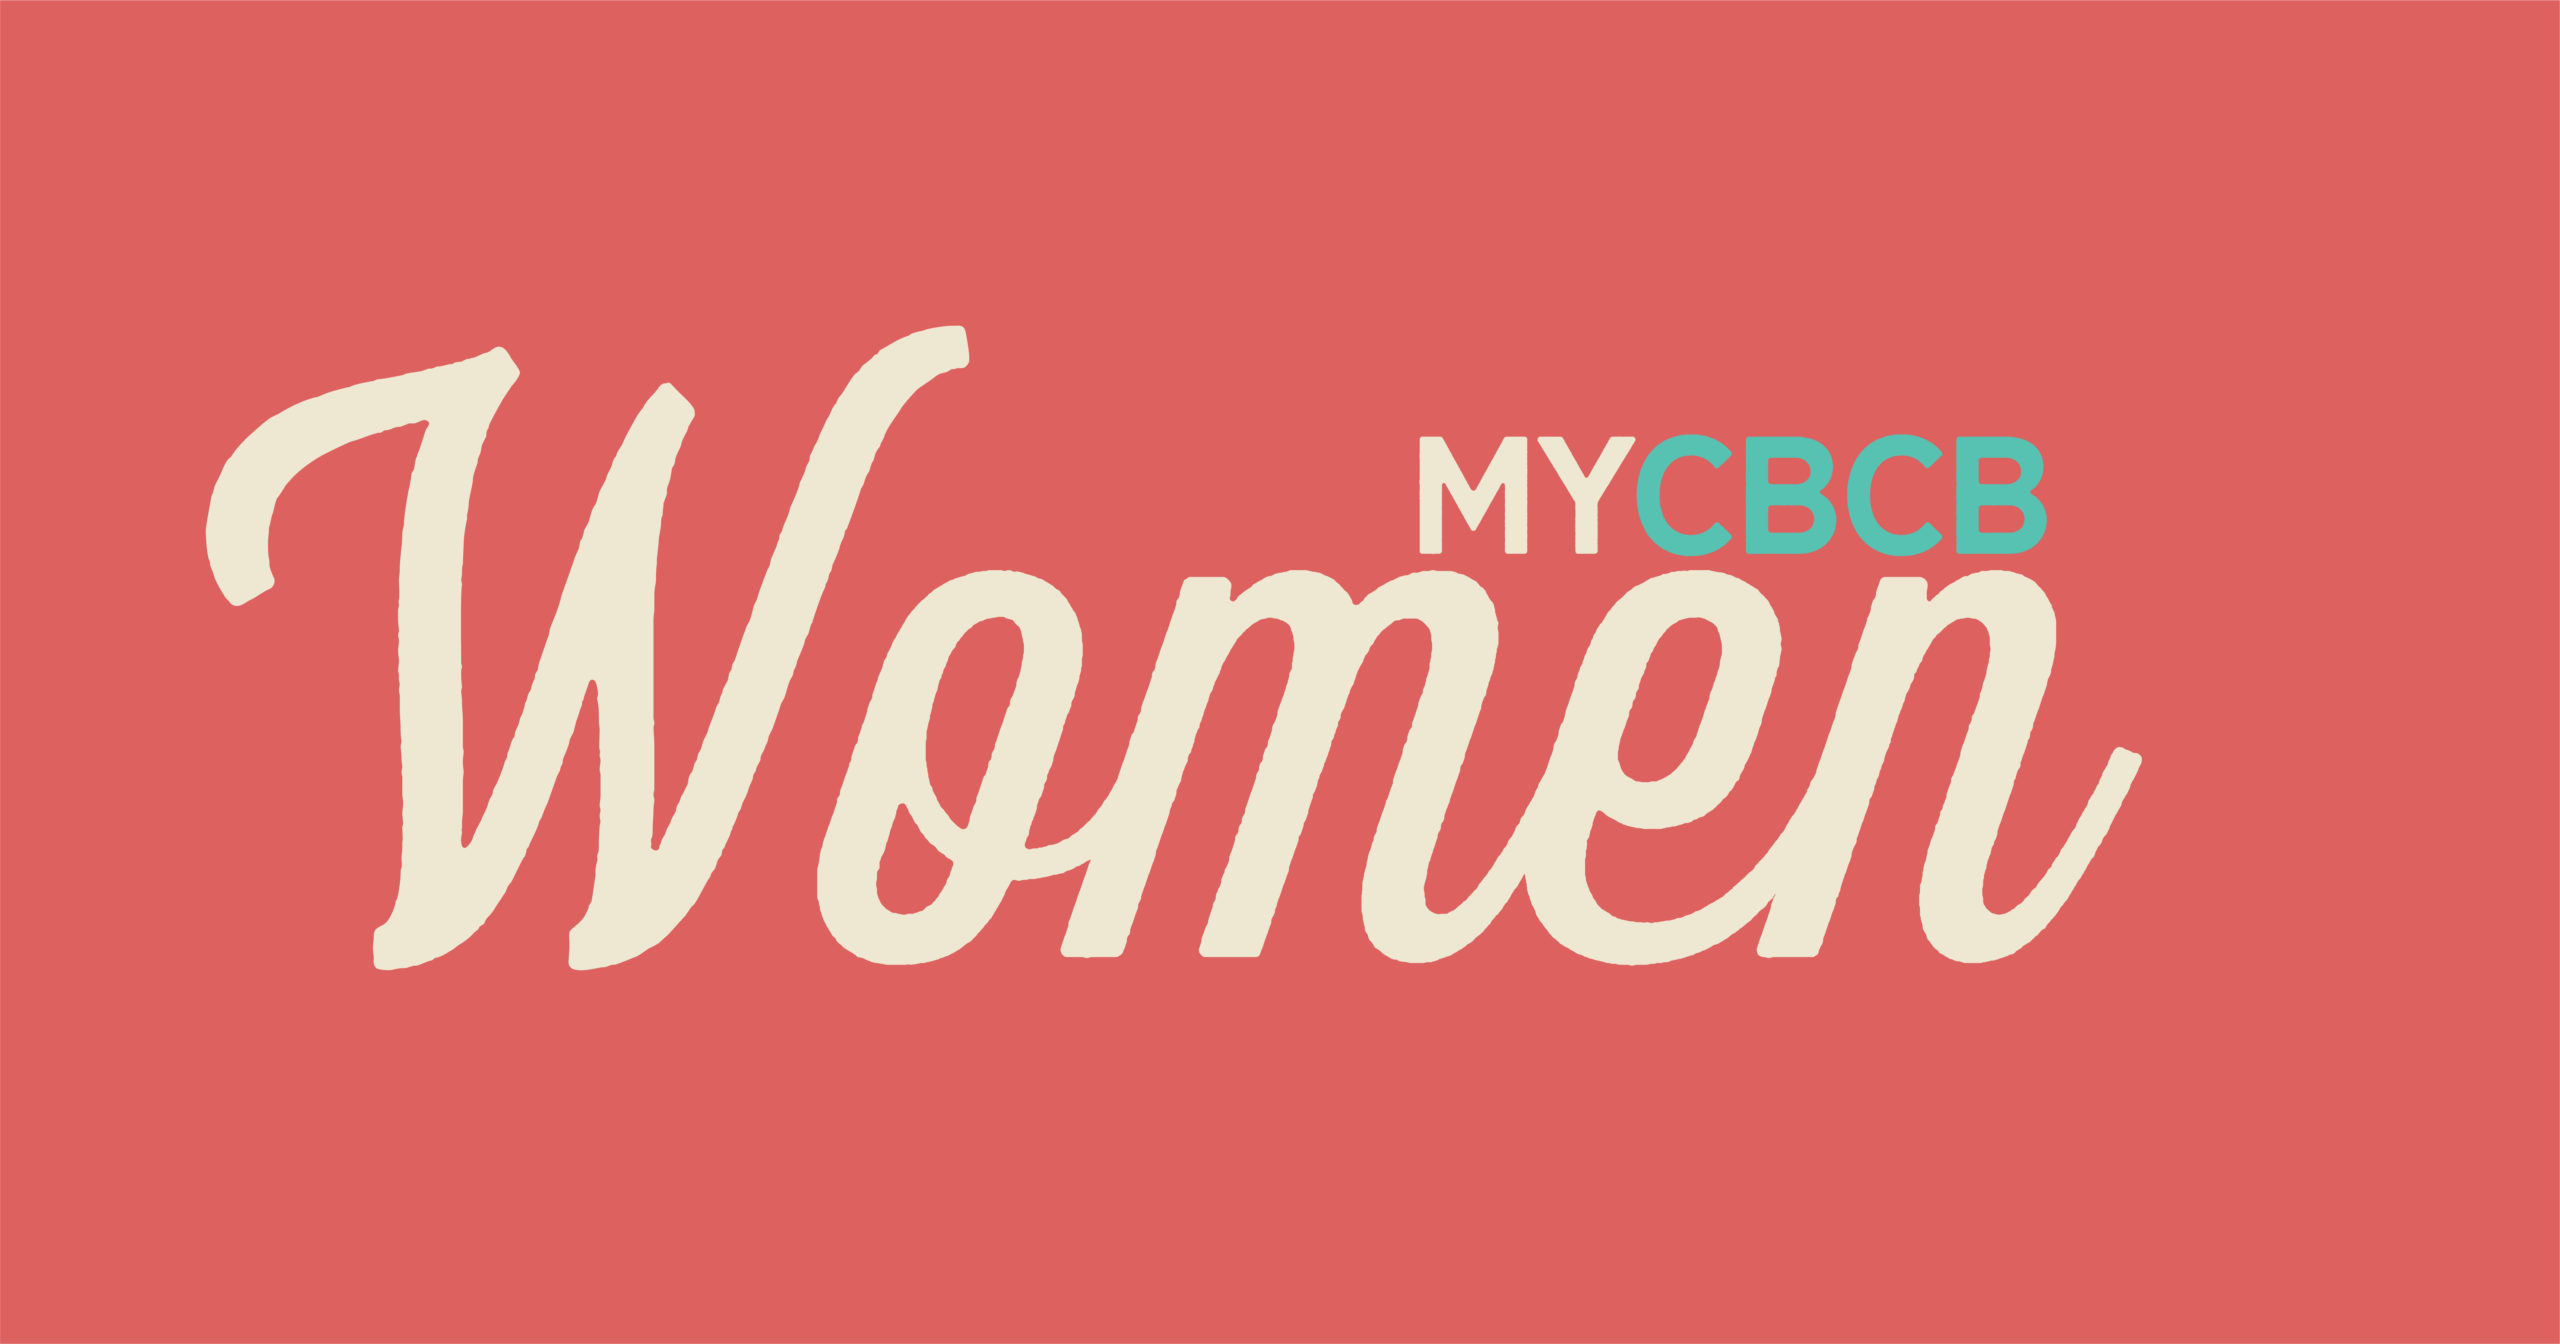 mycbcb women's ministry